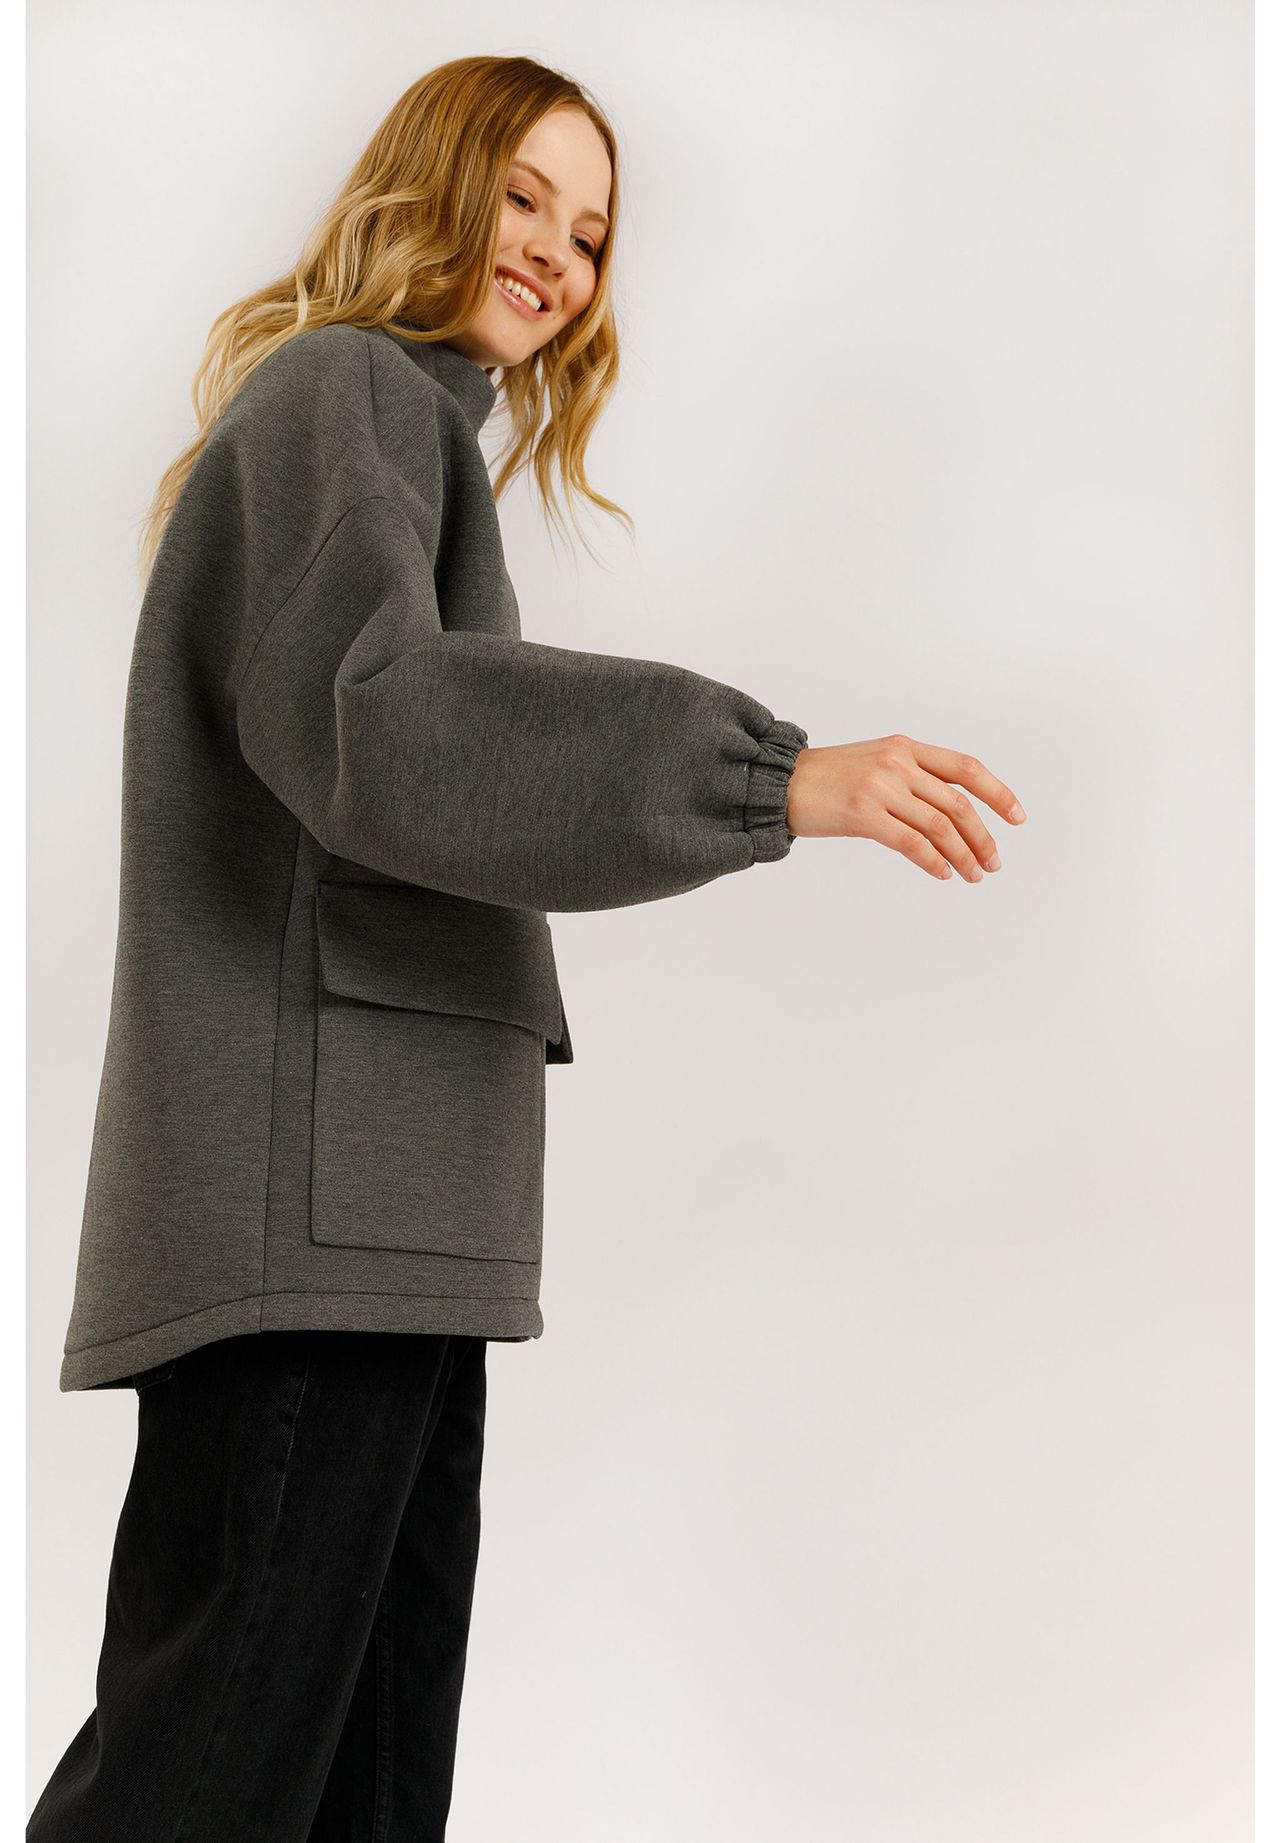 Damen Bekleidung FINN FLARE Jacke im modischen Oversize-Schnitt